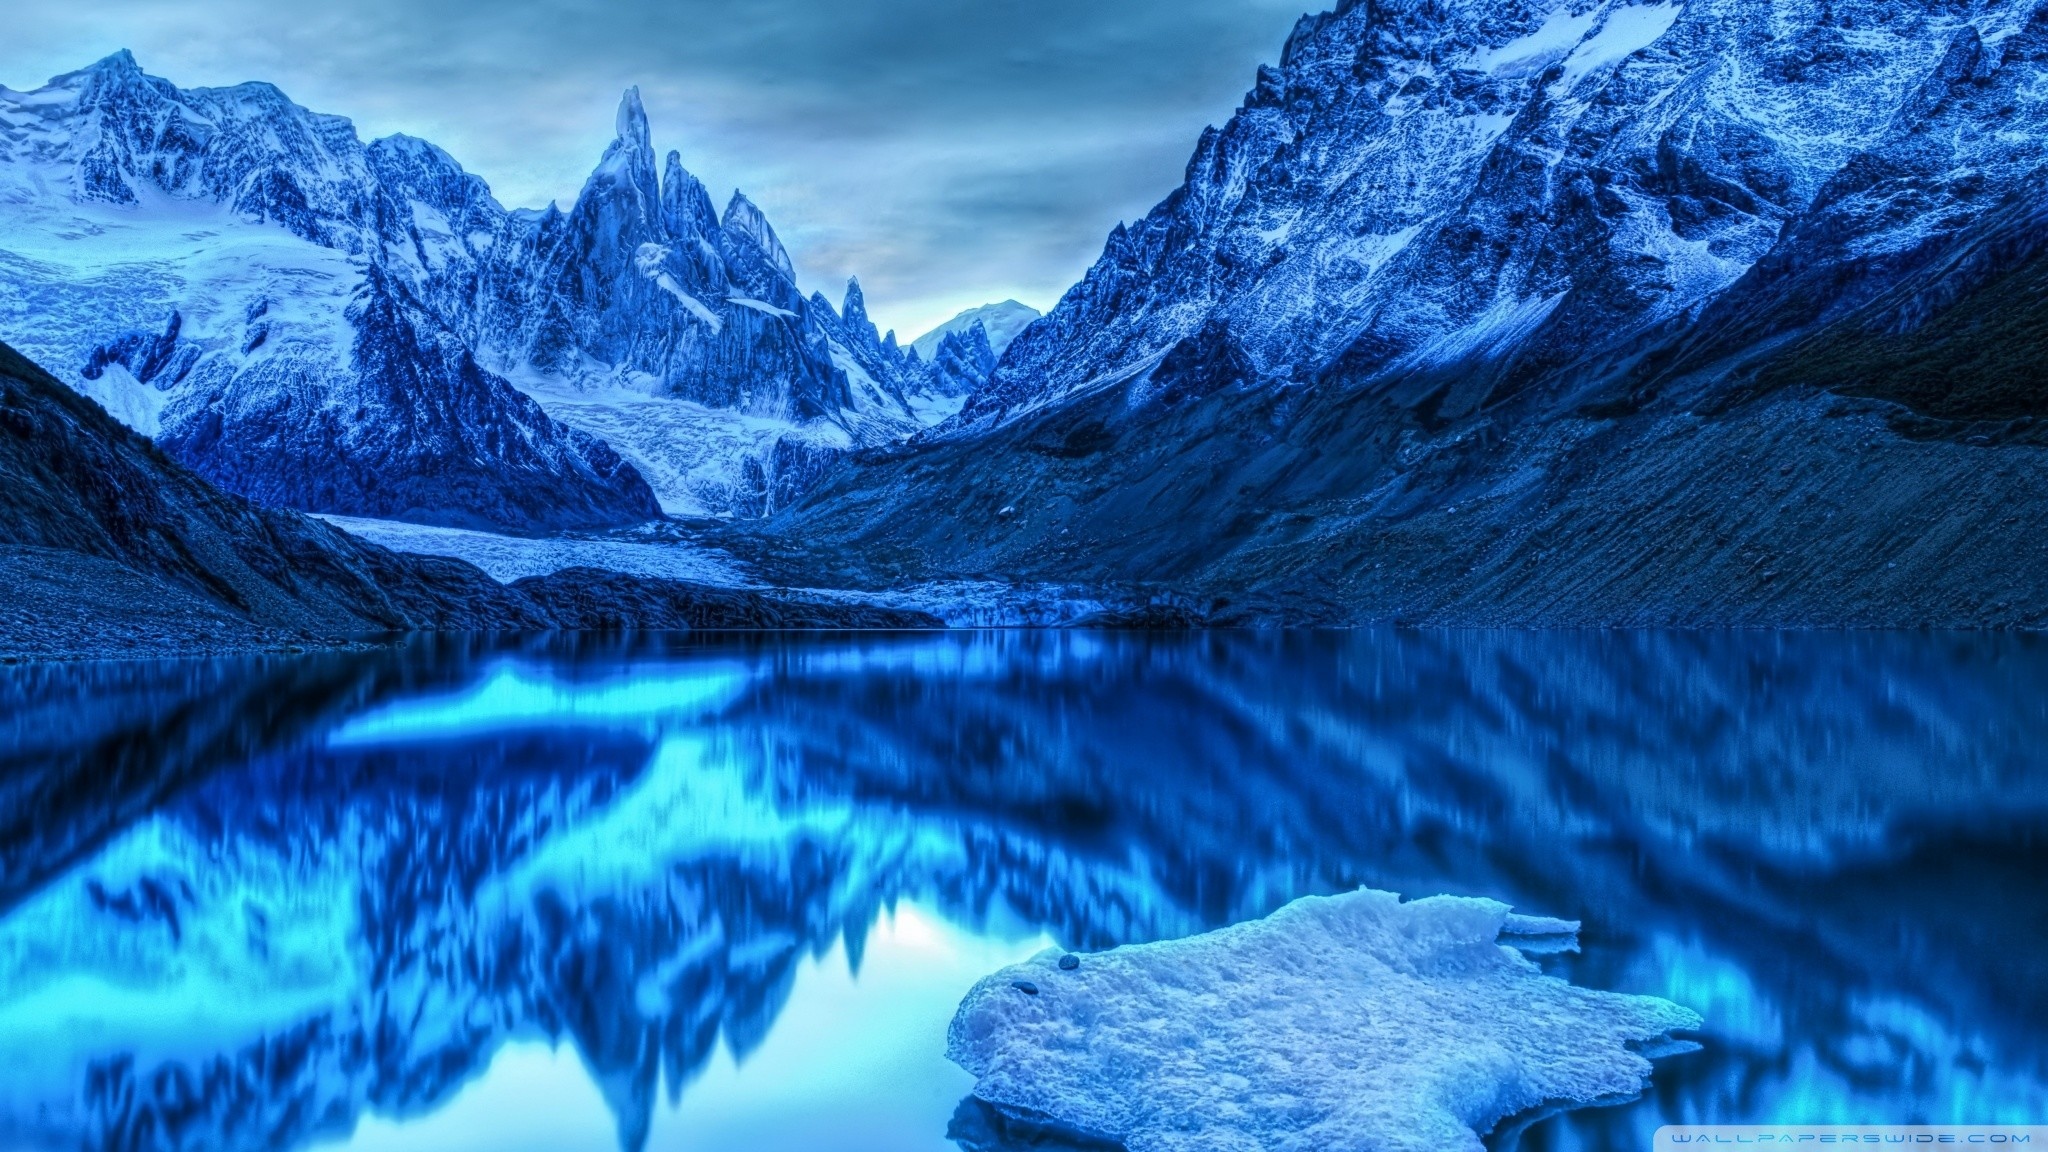 3d Scenery - Blue Ice Mountain